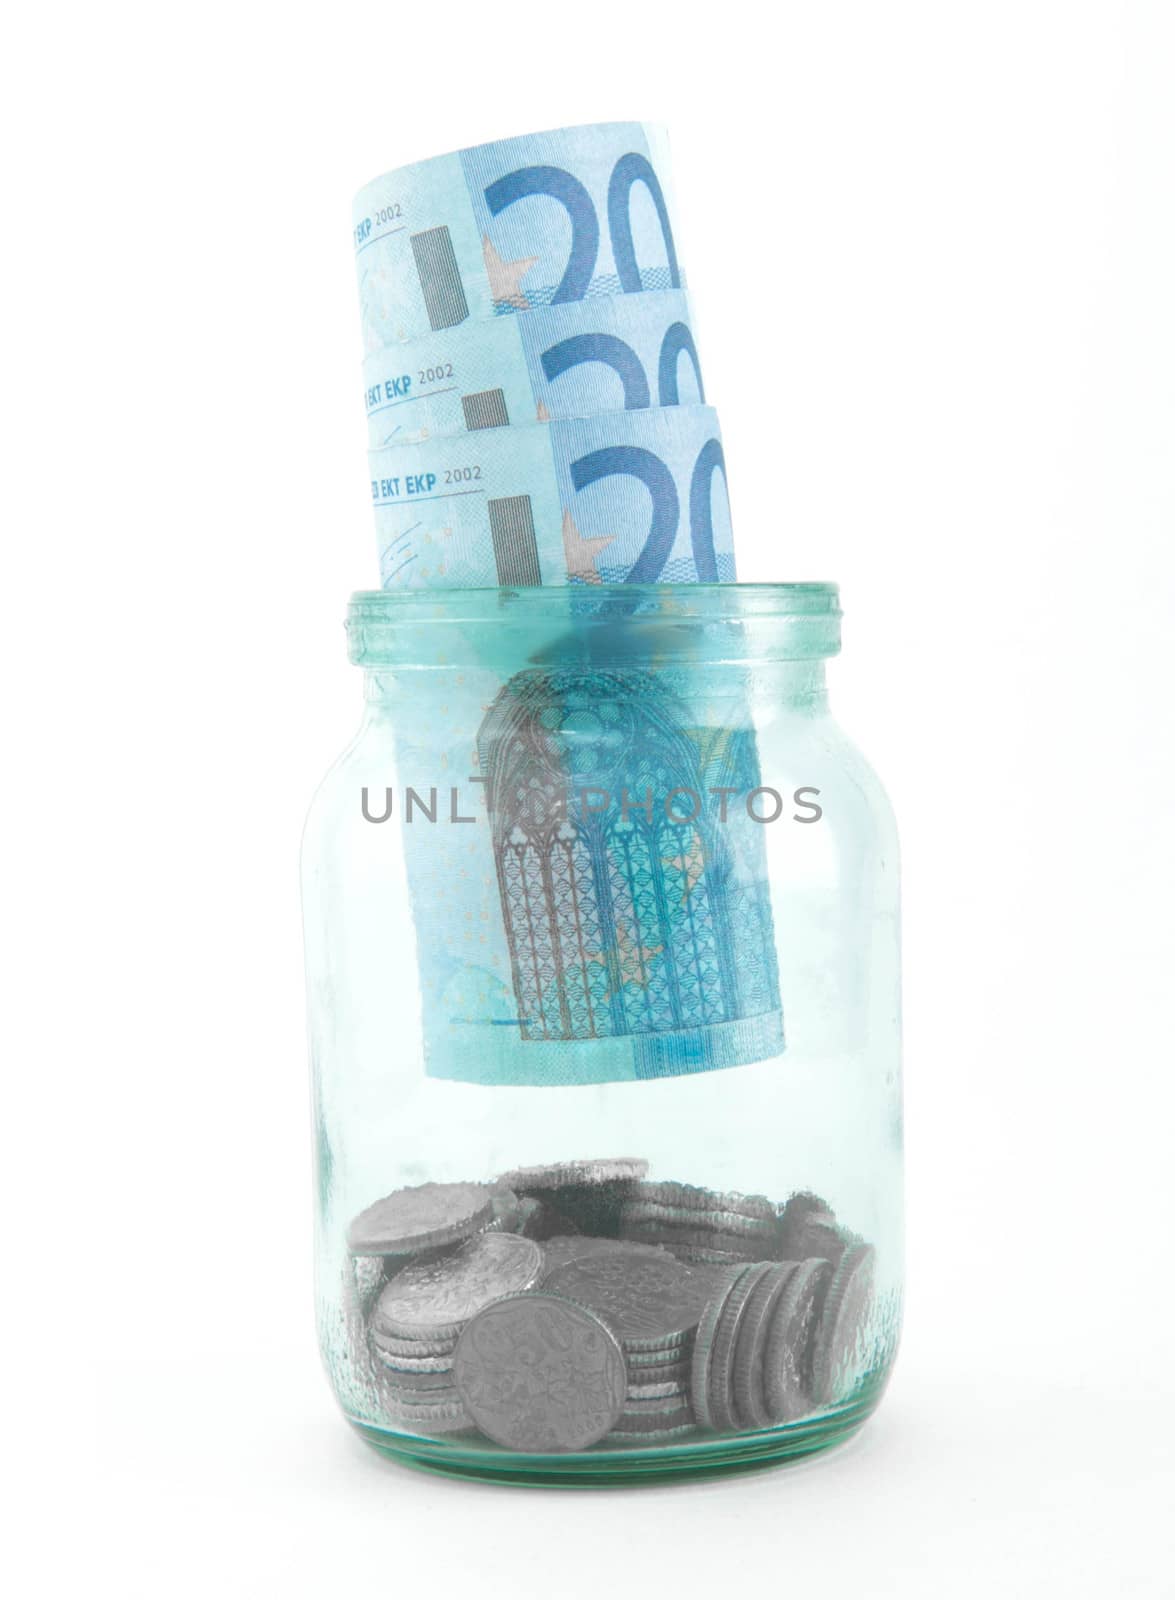 euro in glass by shutswis